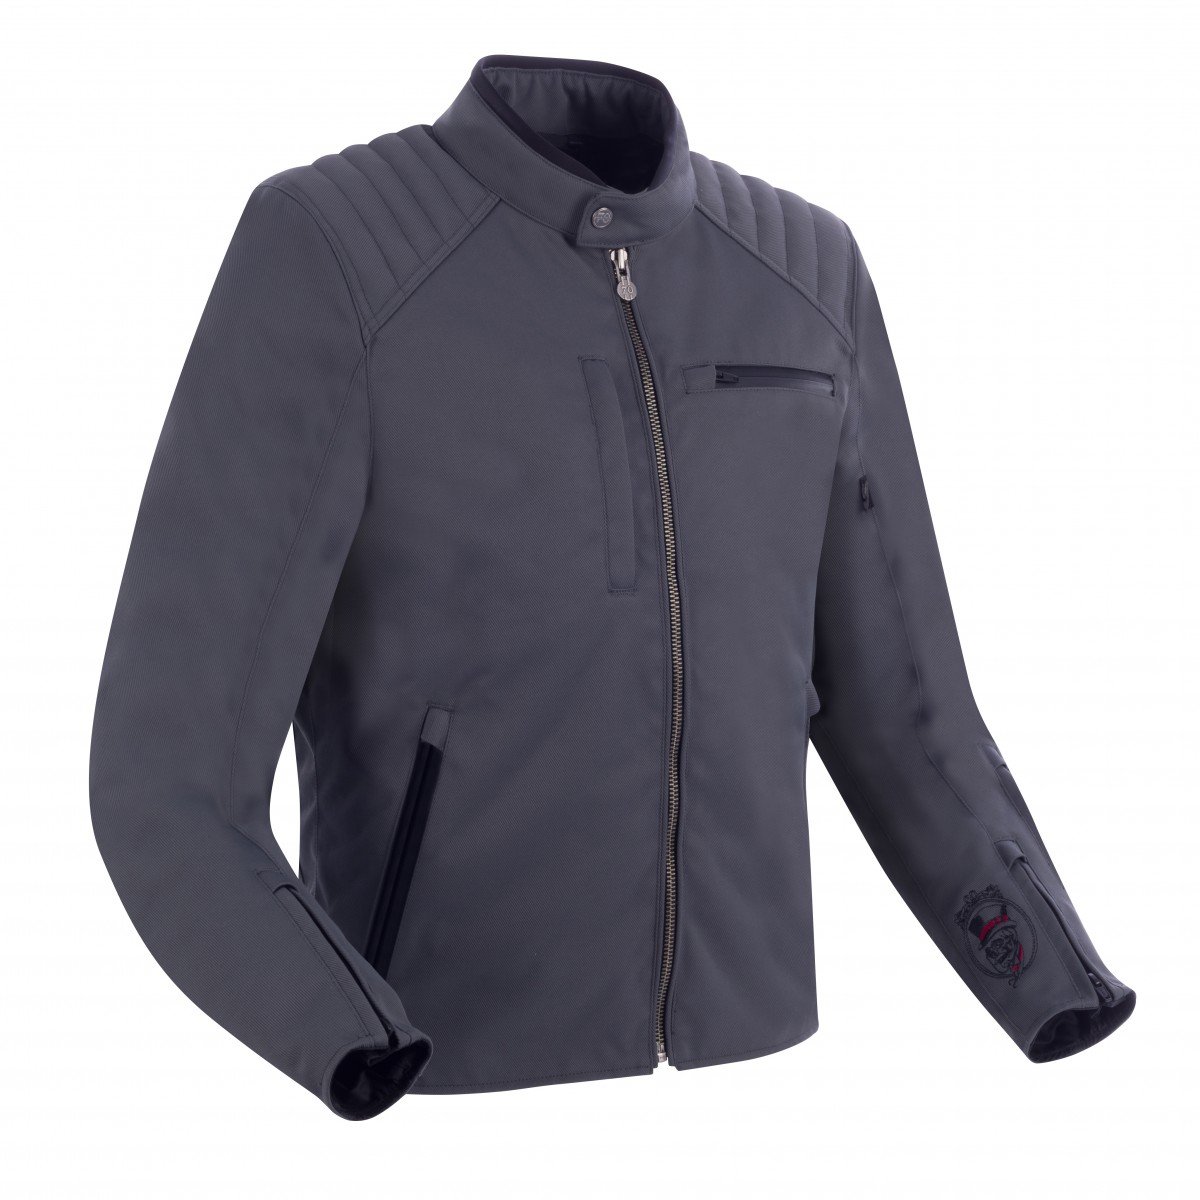 Image of Segura Eternal Jacket Gray Size 4XL ID 3660815168615